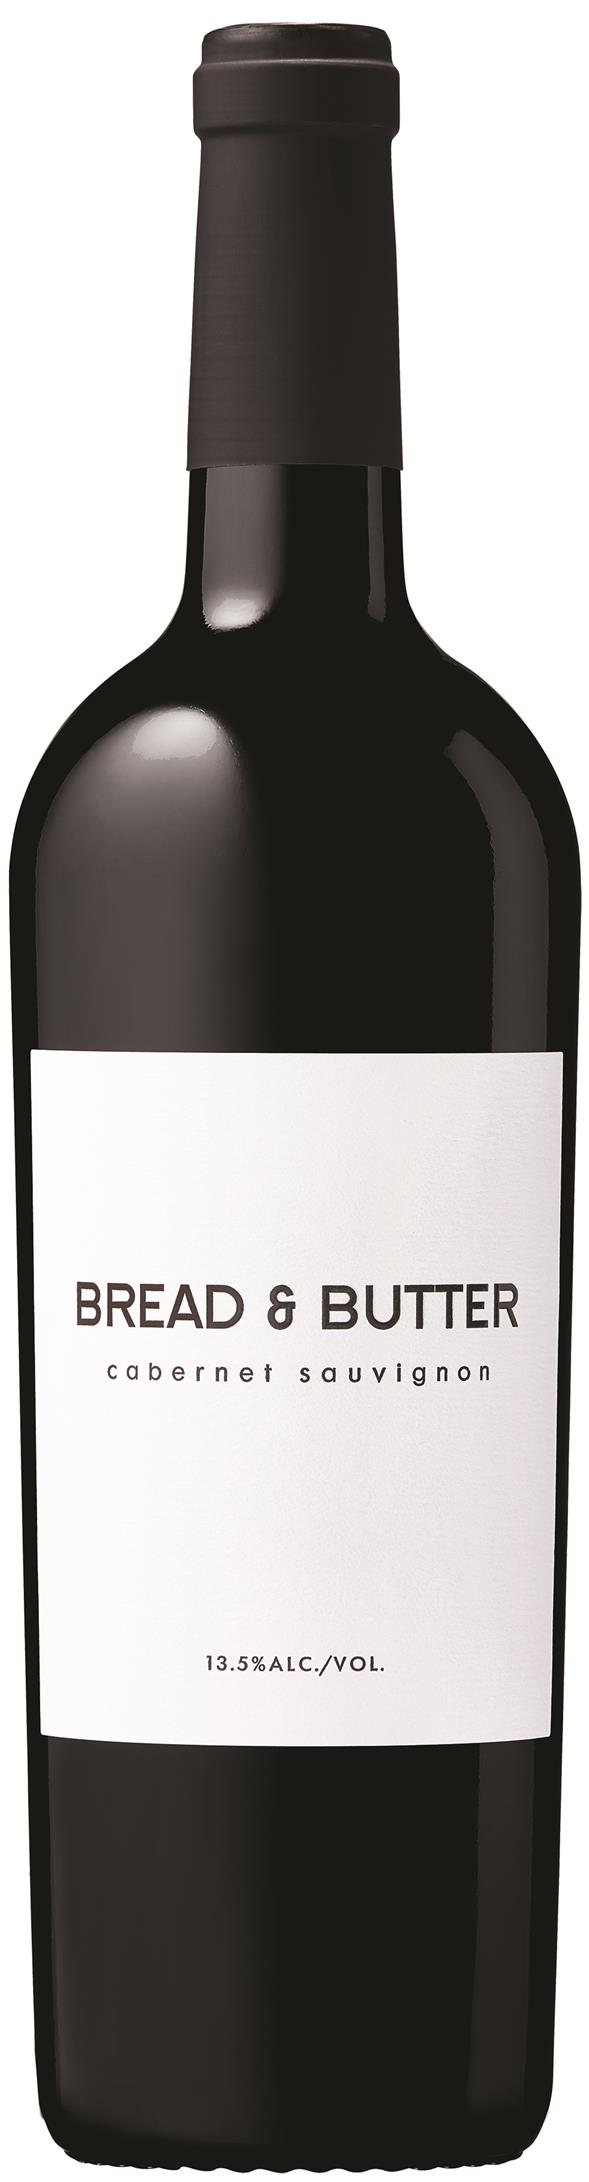 Bread & Butter - Cabernet Sauvignon, Californien